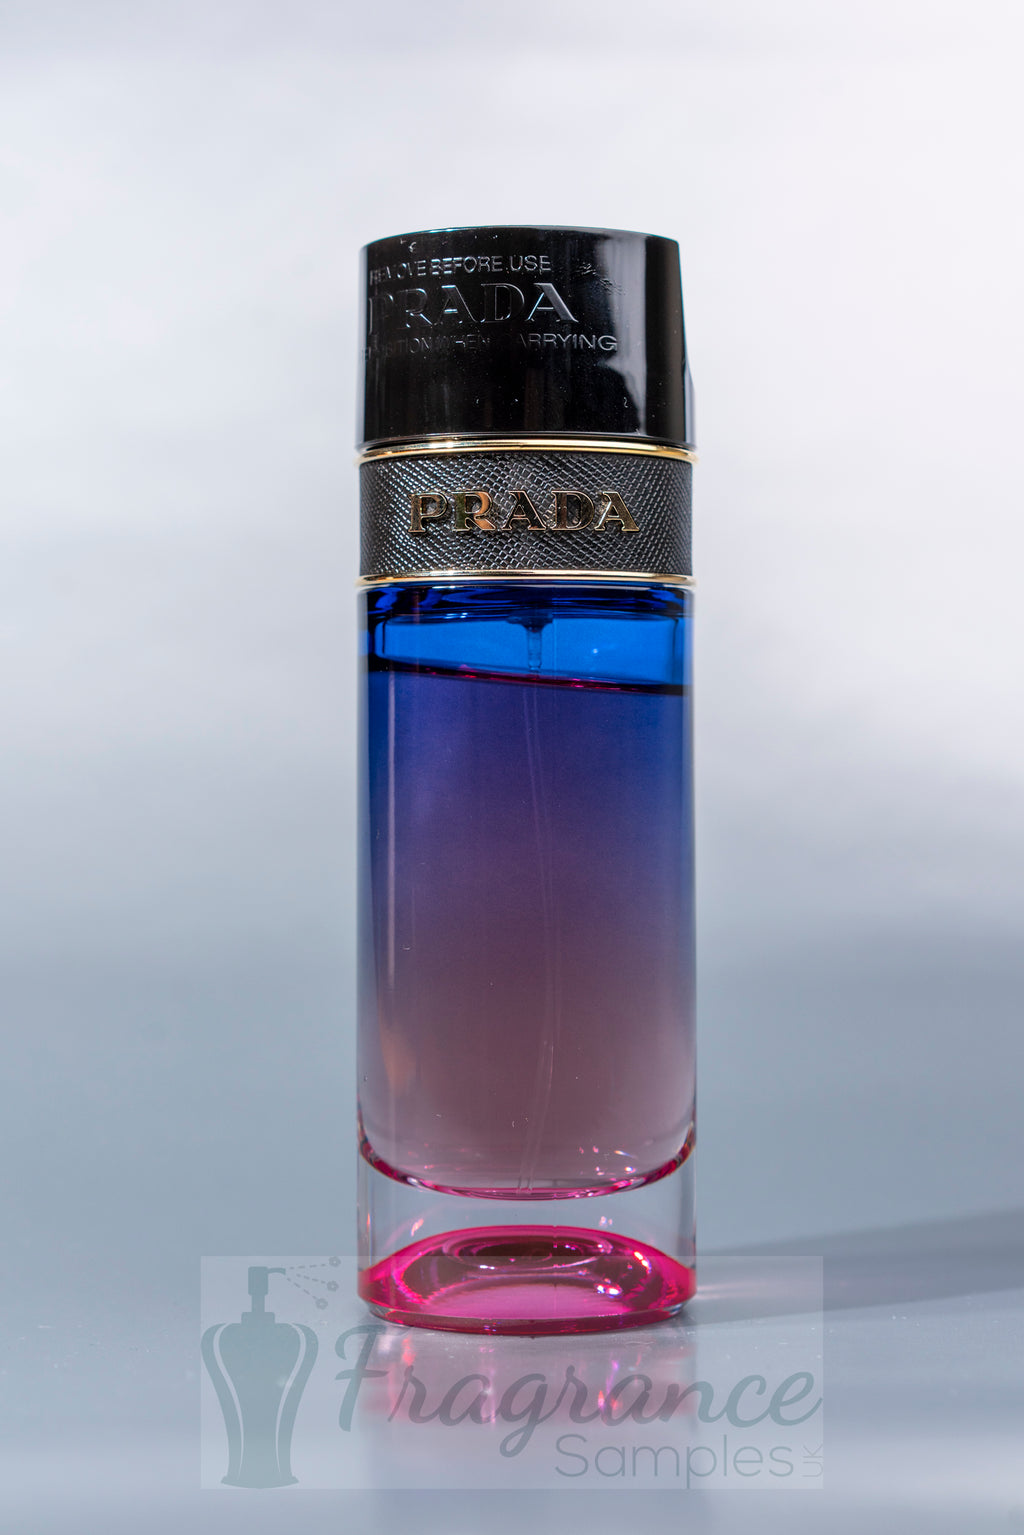 Prada Perfume Samples - Fragrance Samples UK